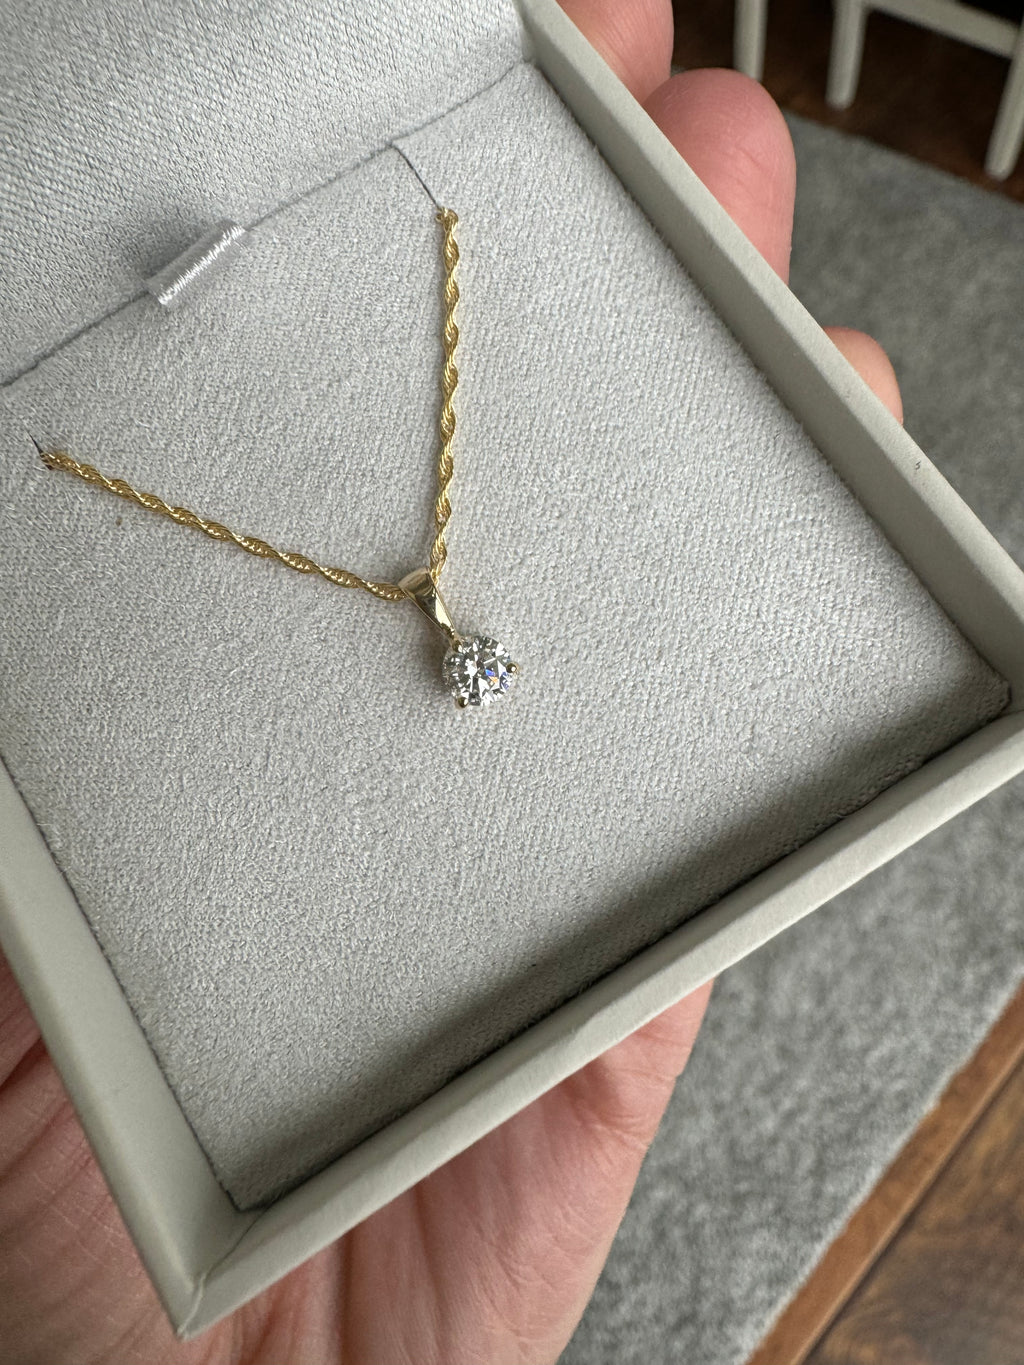 14k yg lab grown diamond pendant on a 10k yg rope chain (18")